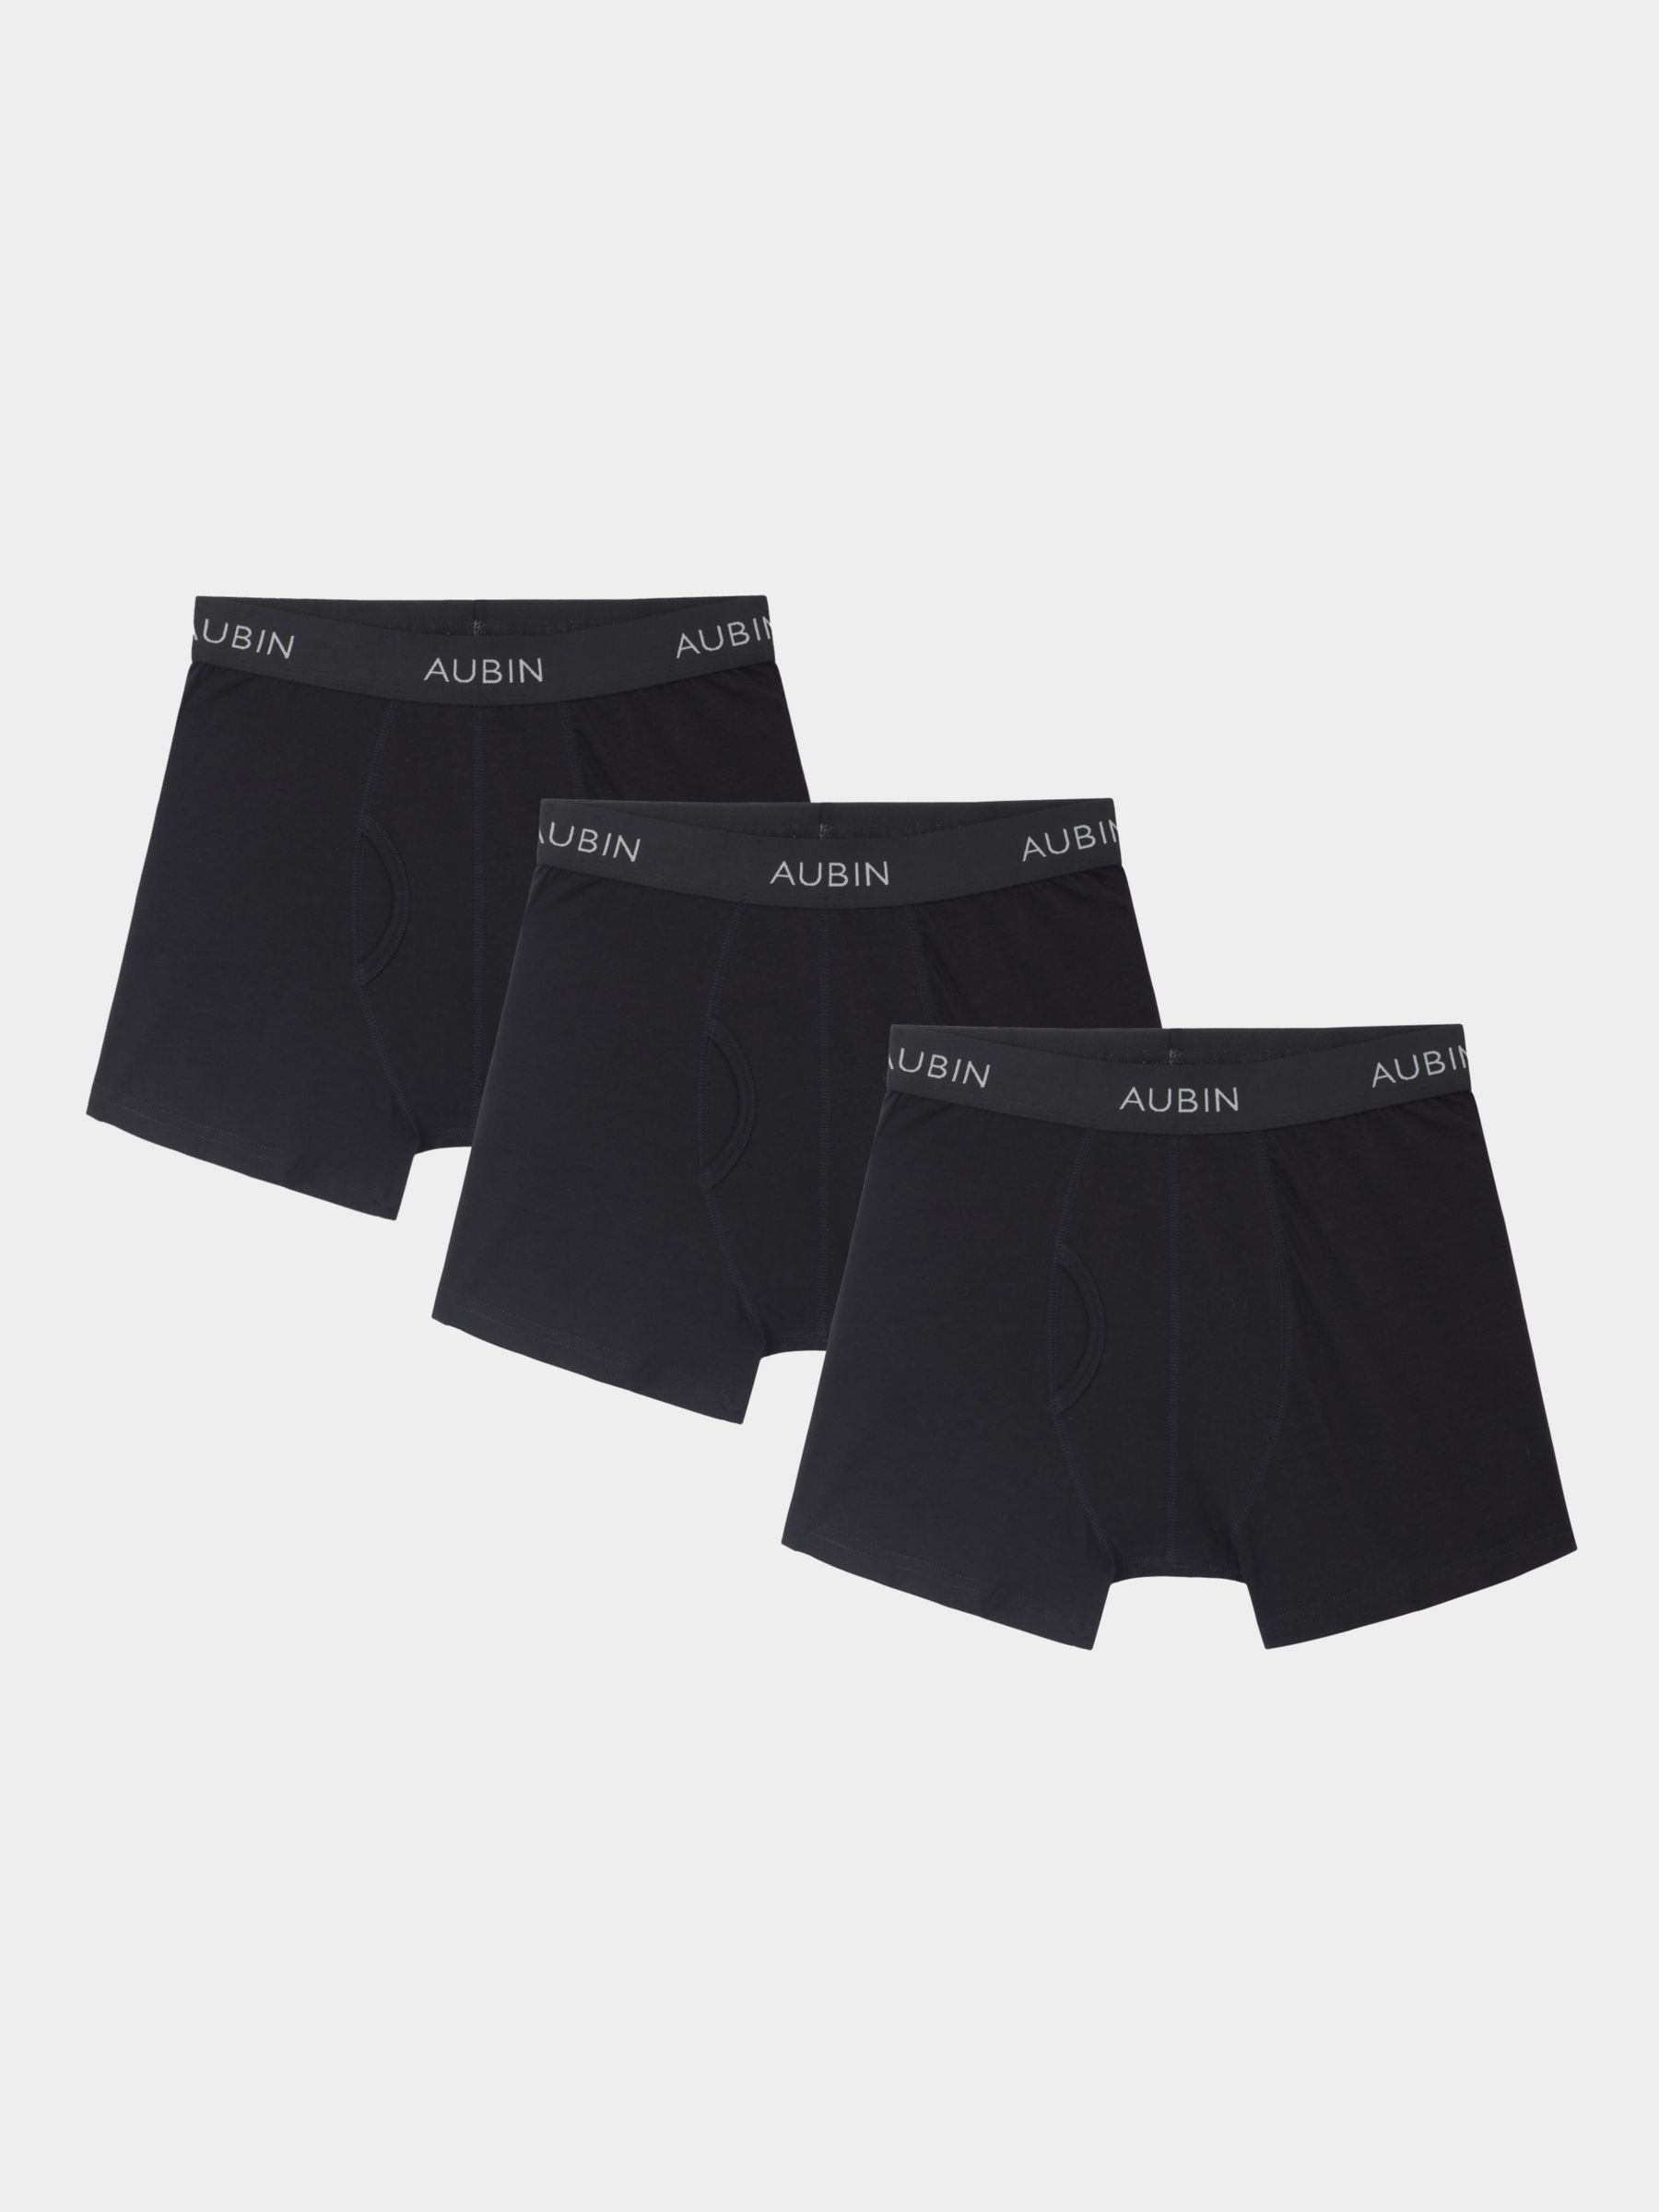 Aubin Hellston Boxers, Pack of 3, Black, S